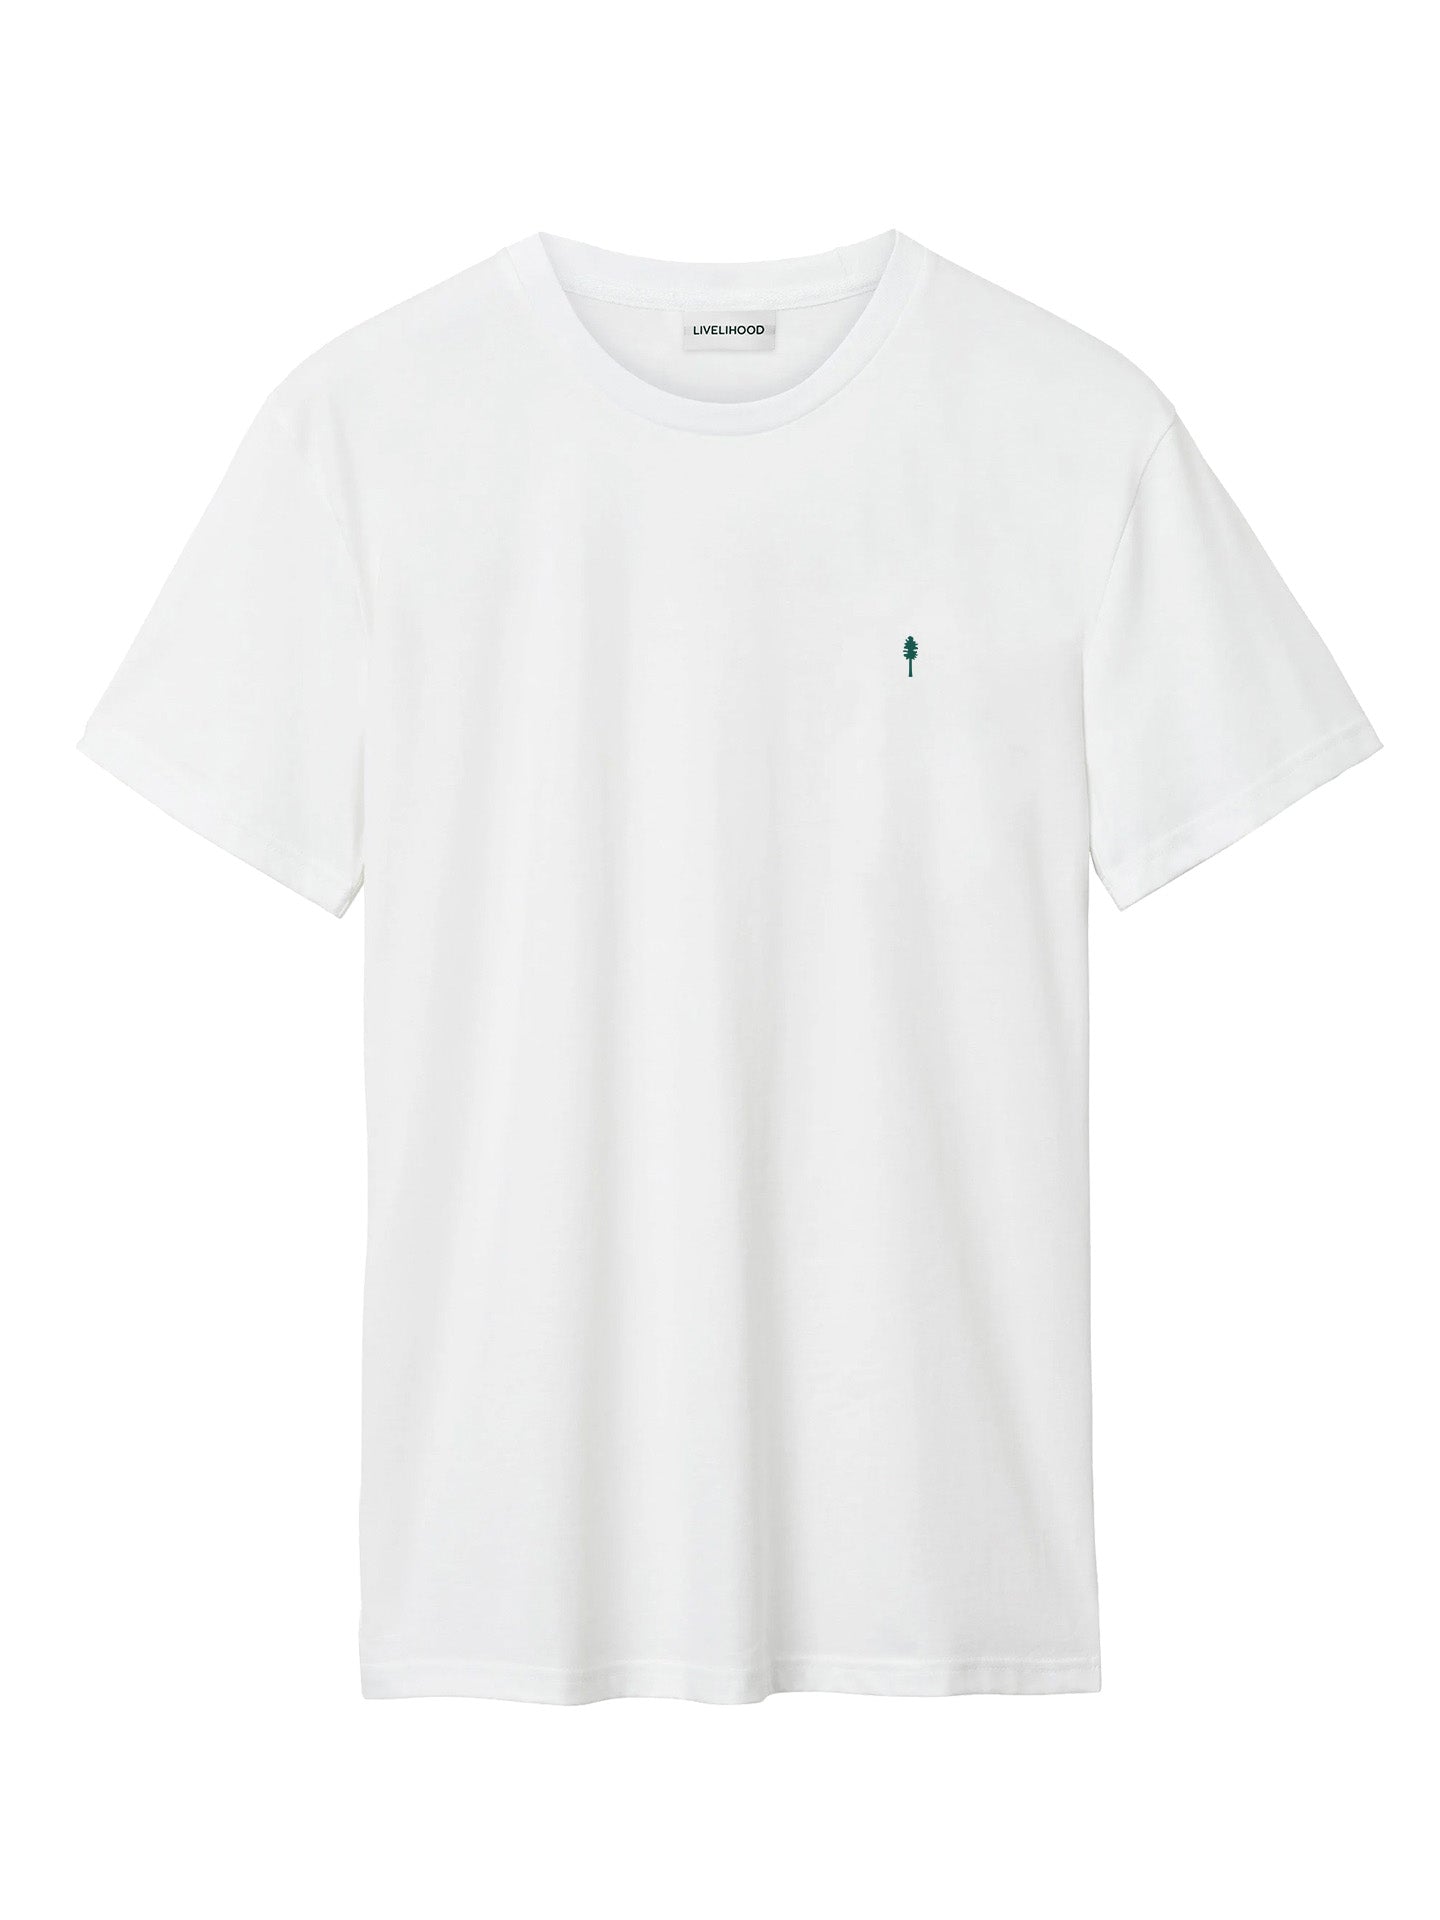 The T-Shirt - White